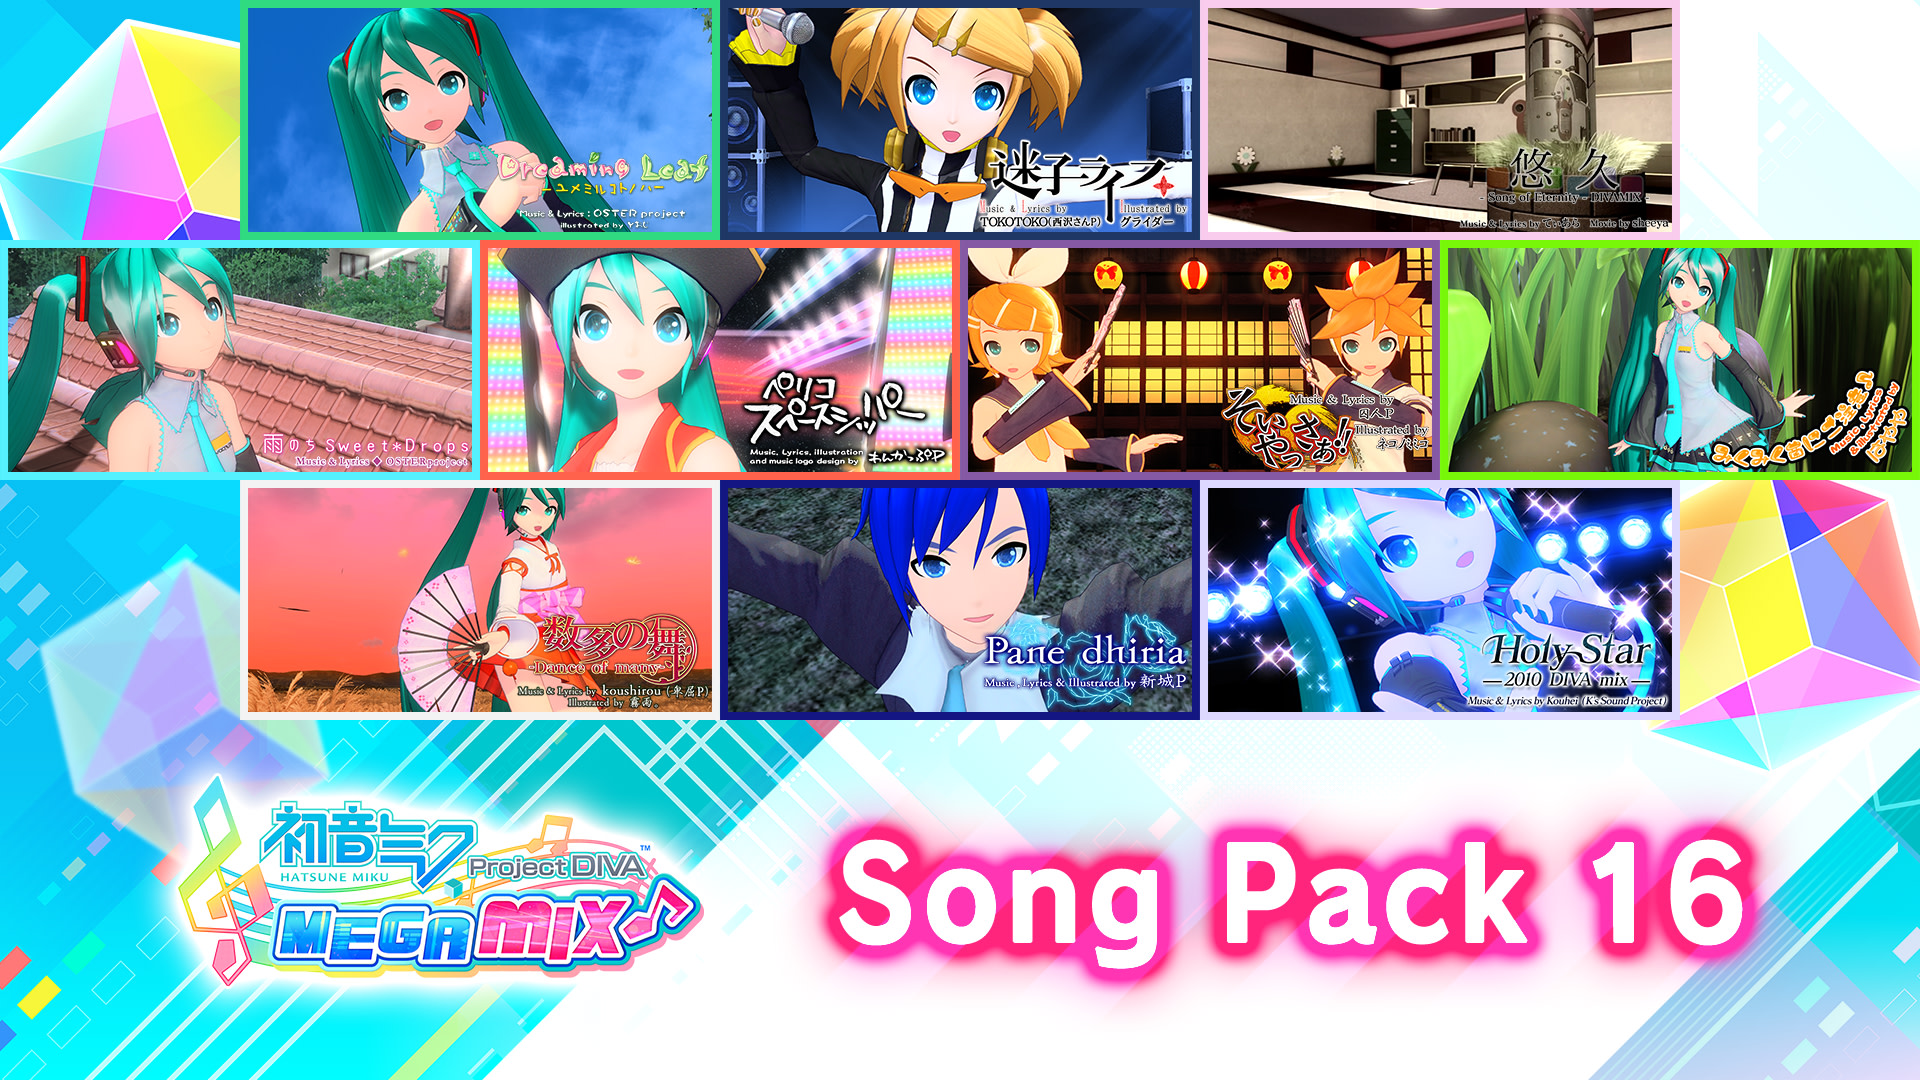 Hatsune Miku: Project DIVA Mega Mix Song Pack 16